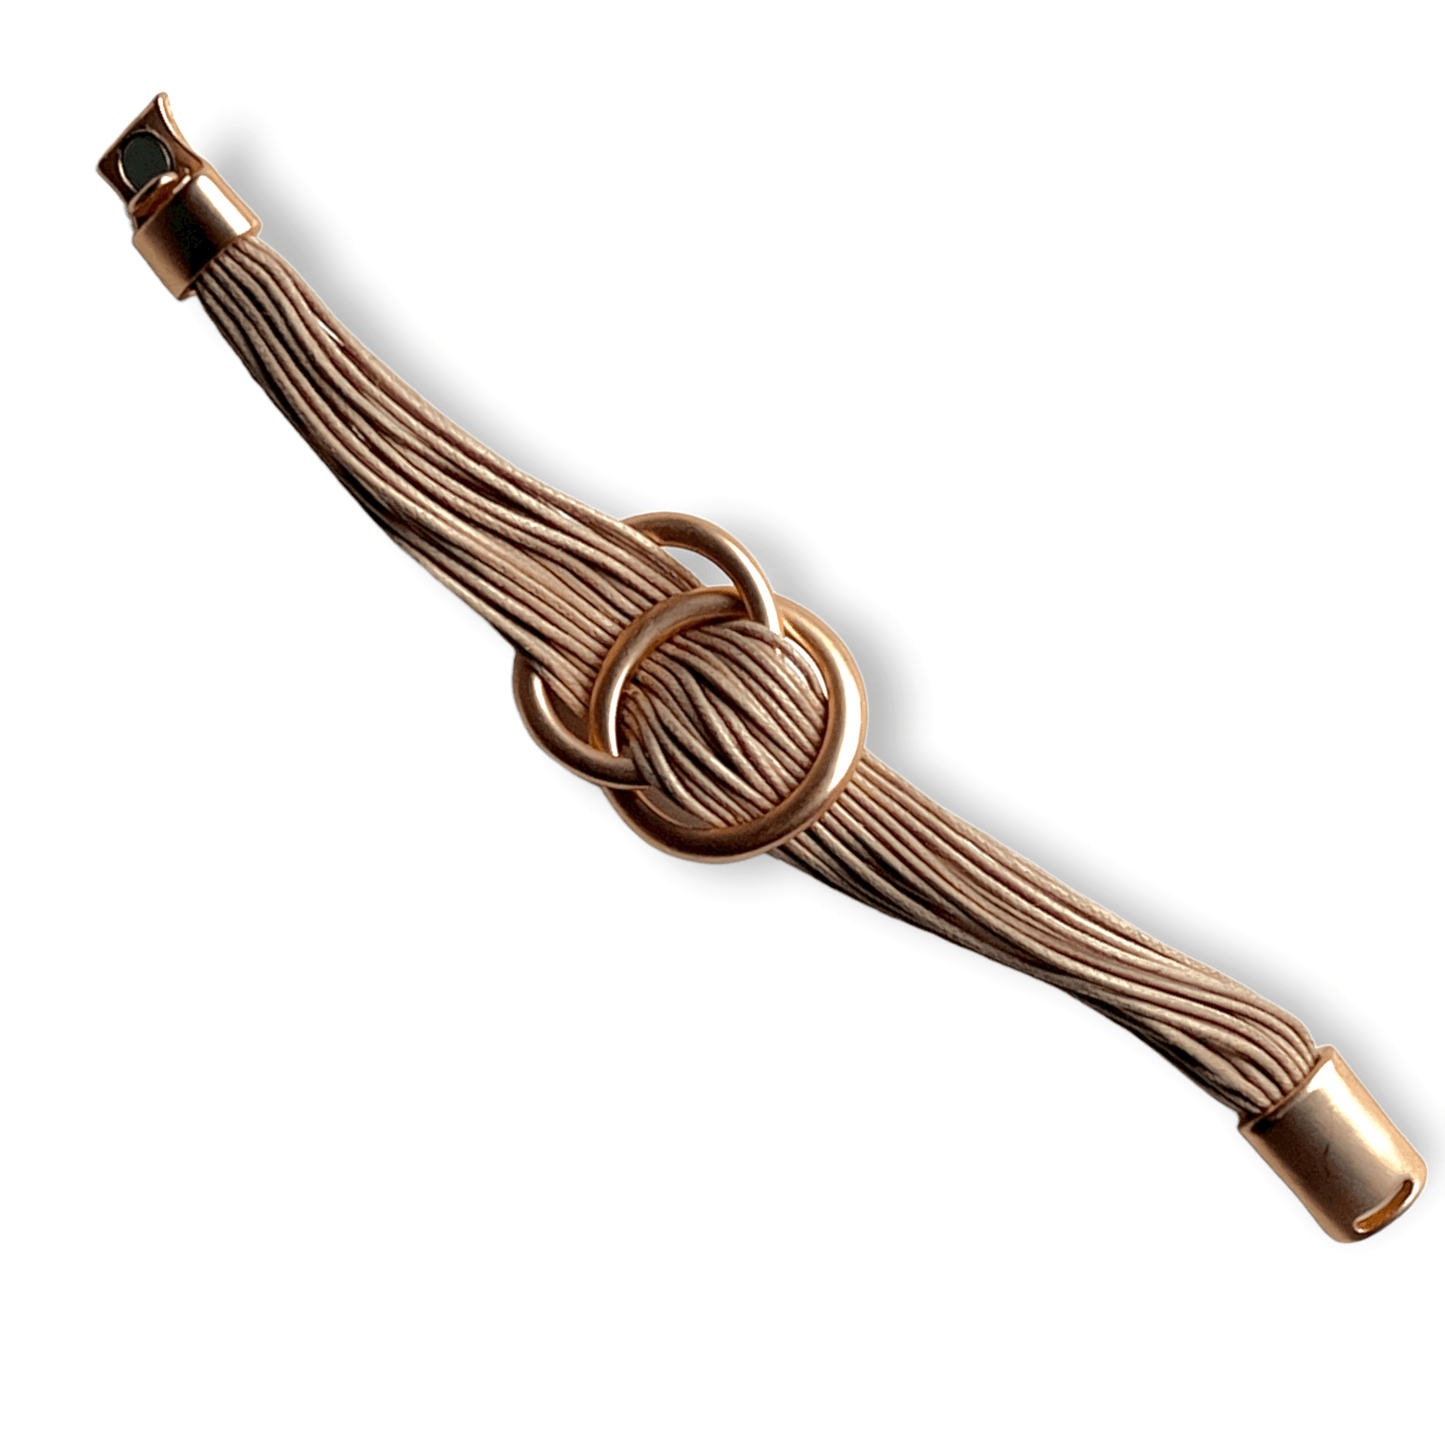 Brass interlocking rings bracelet with tan strapsSundara Joon